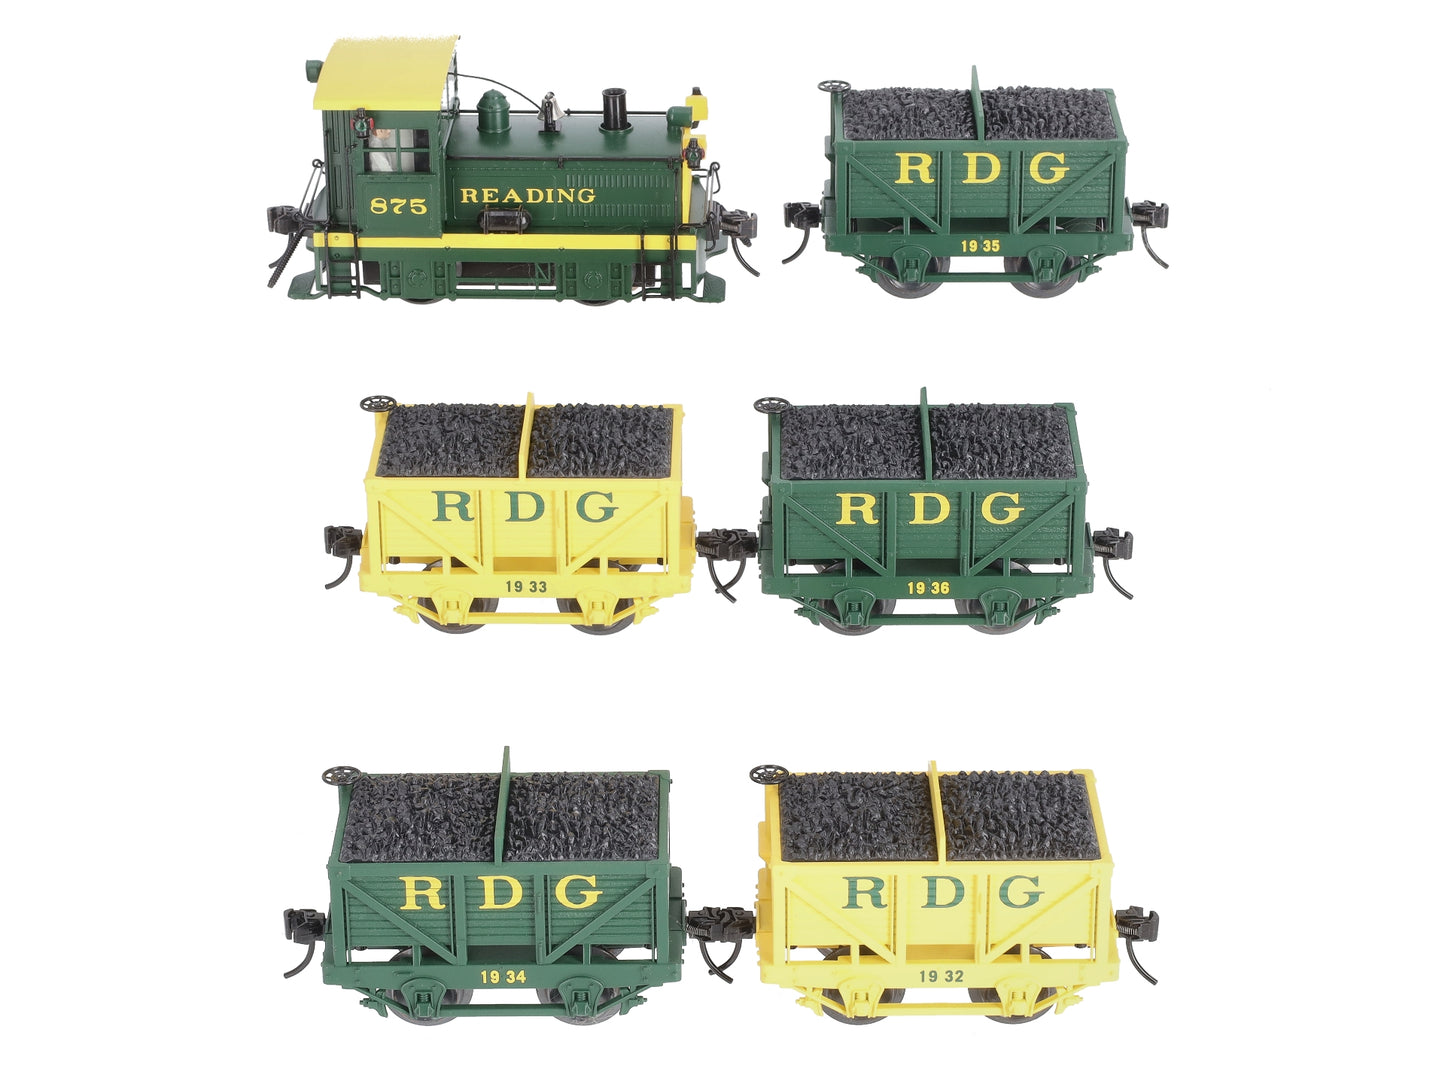 K-Line K1415 O Gauge Reading Plymouth Switcher Steam Freight Train Set EX/Box